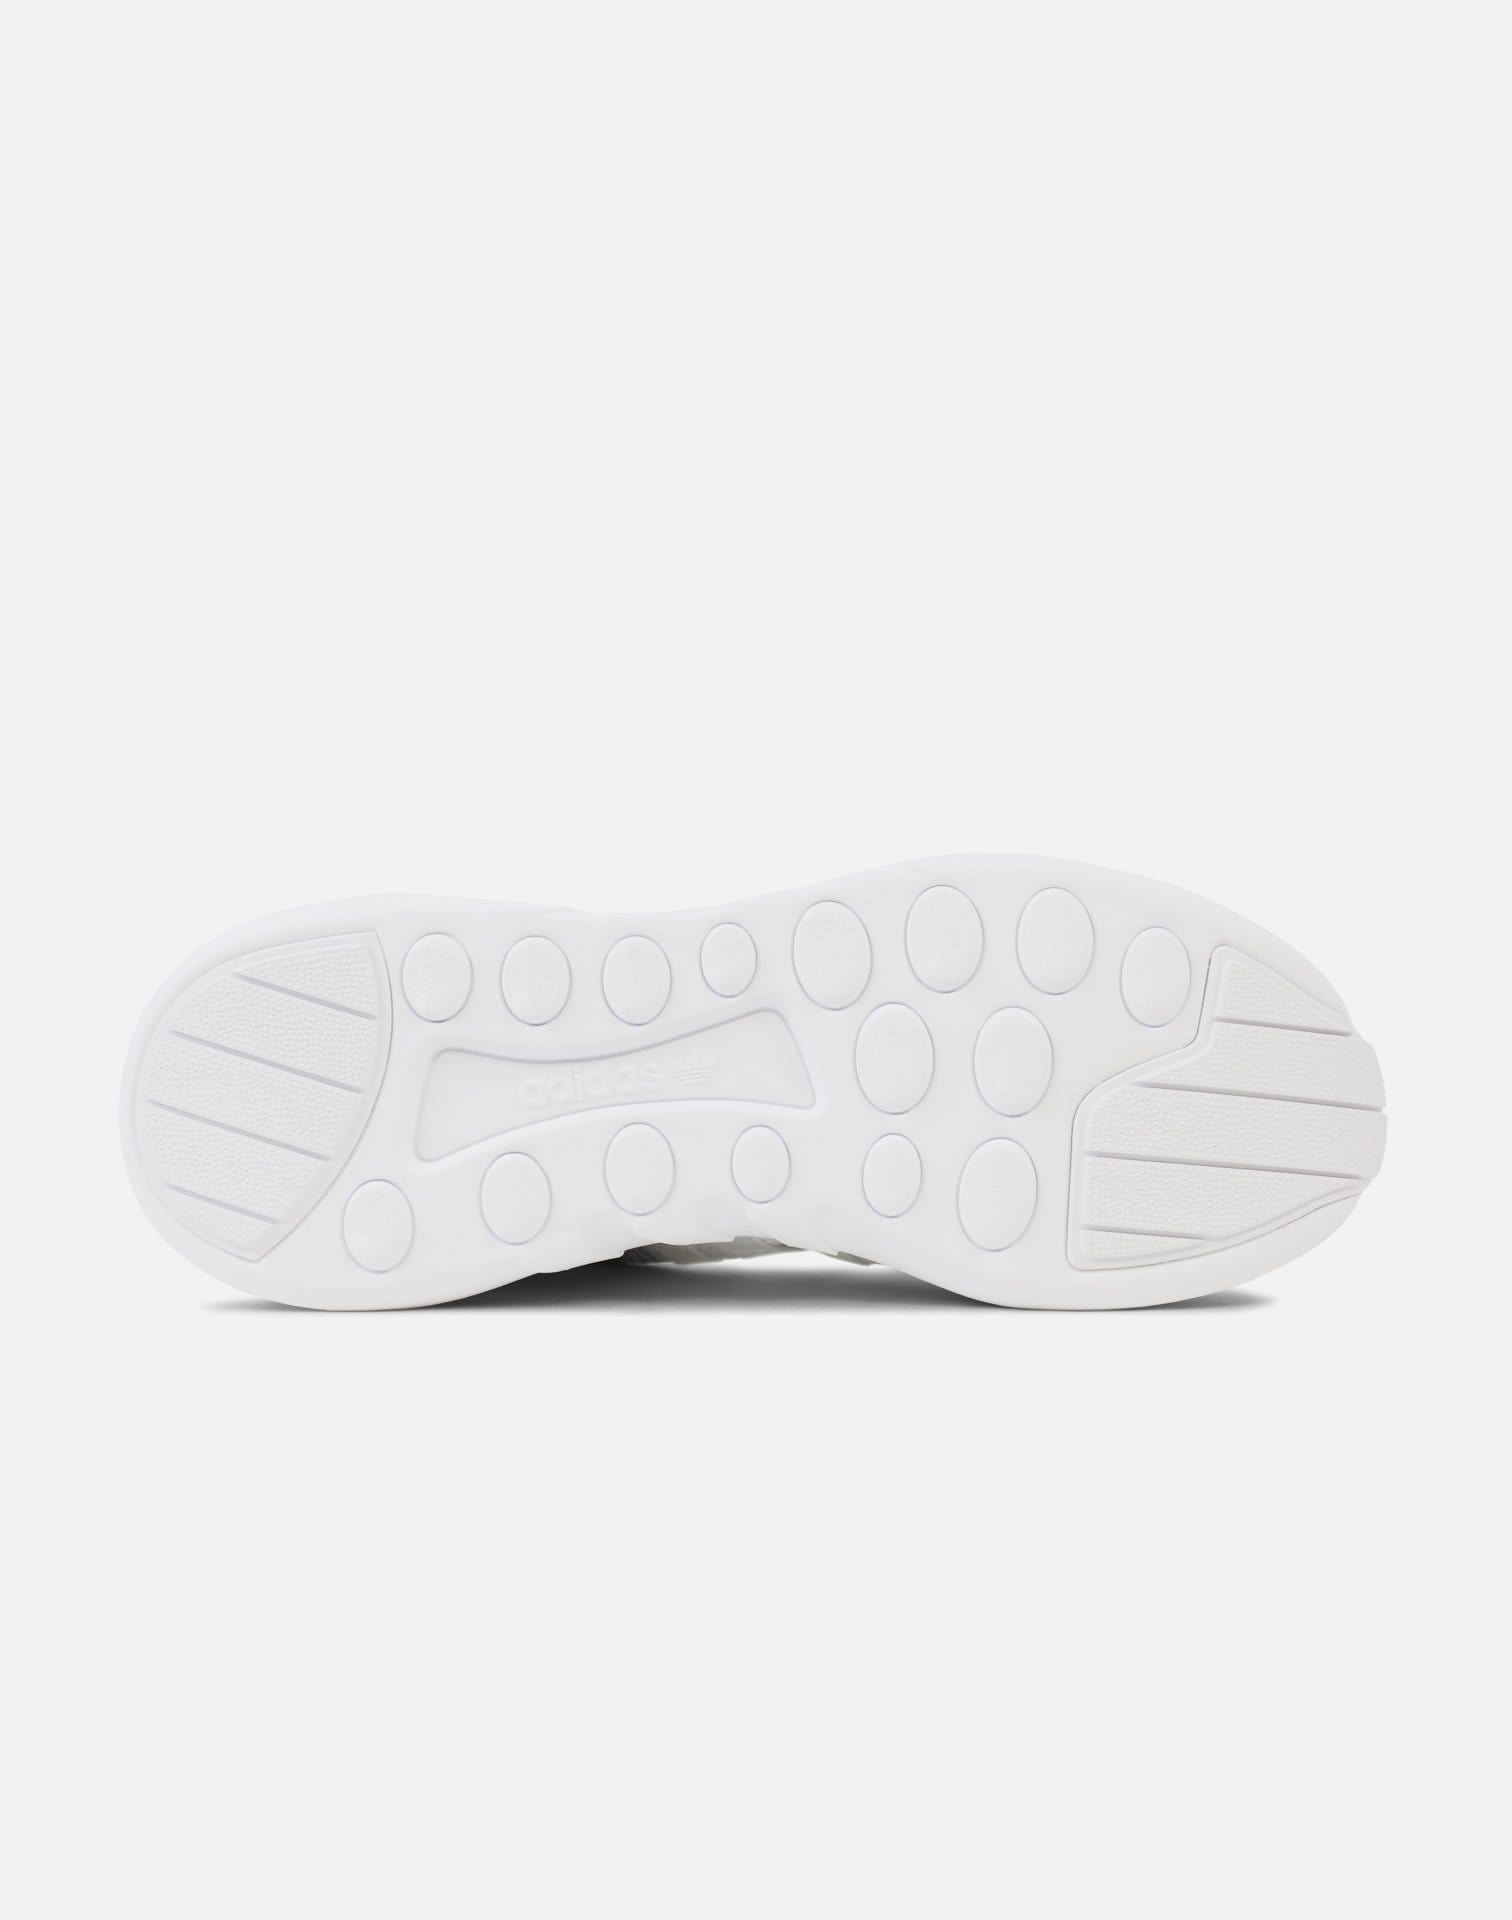 adidas EQT Support ADV Primeknit (Footwear White/Footwear White-Sub Green)